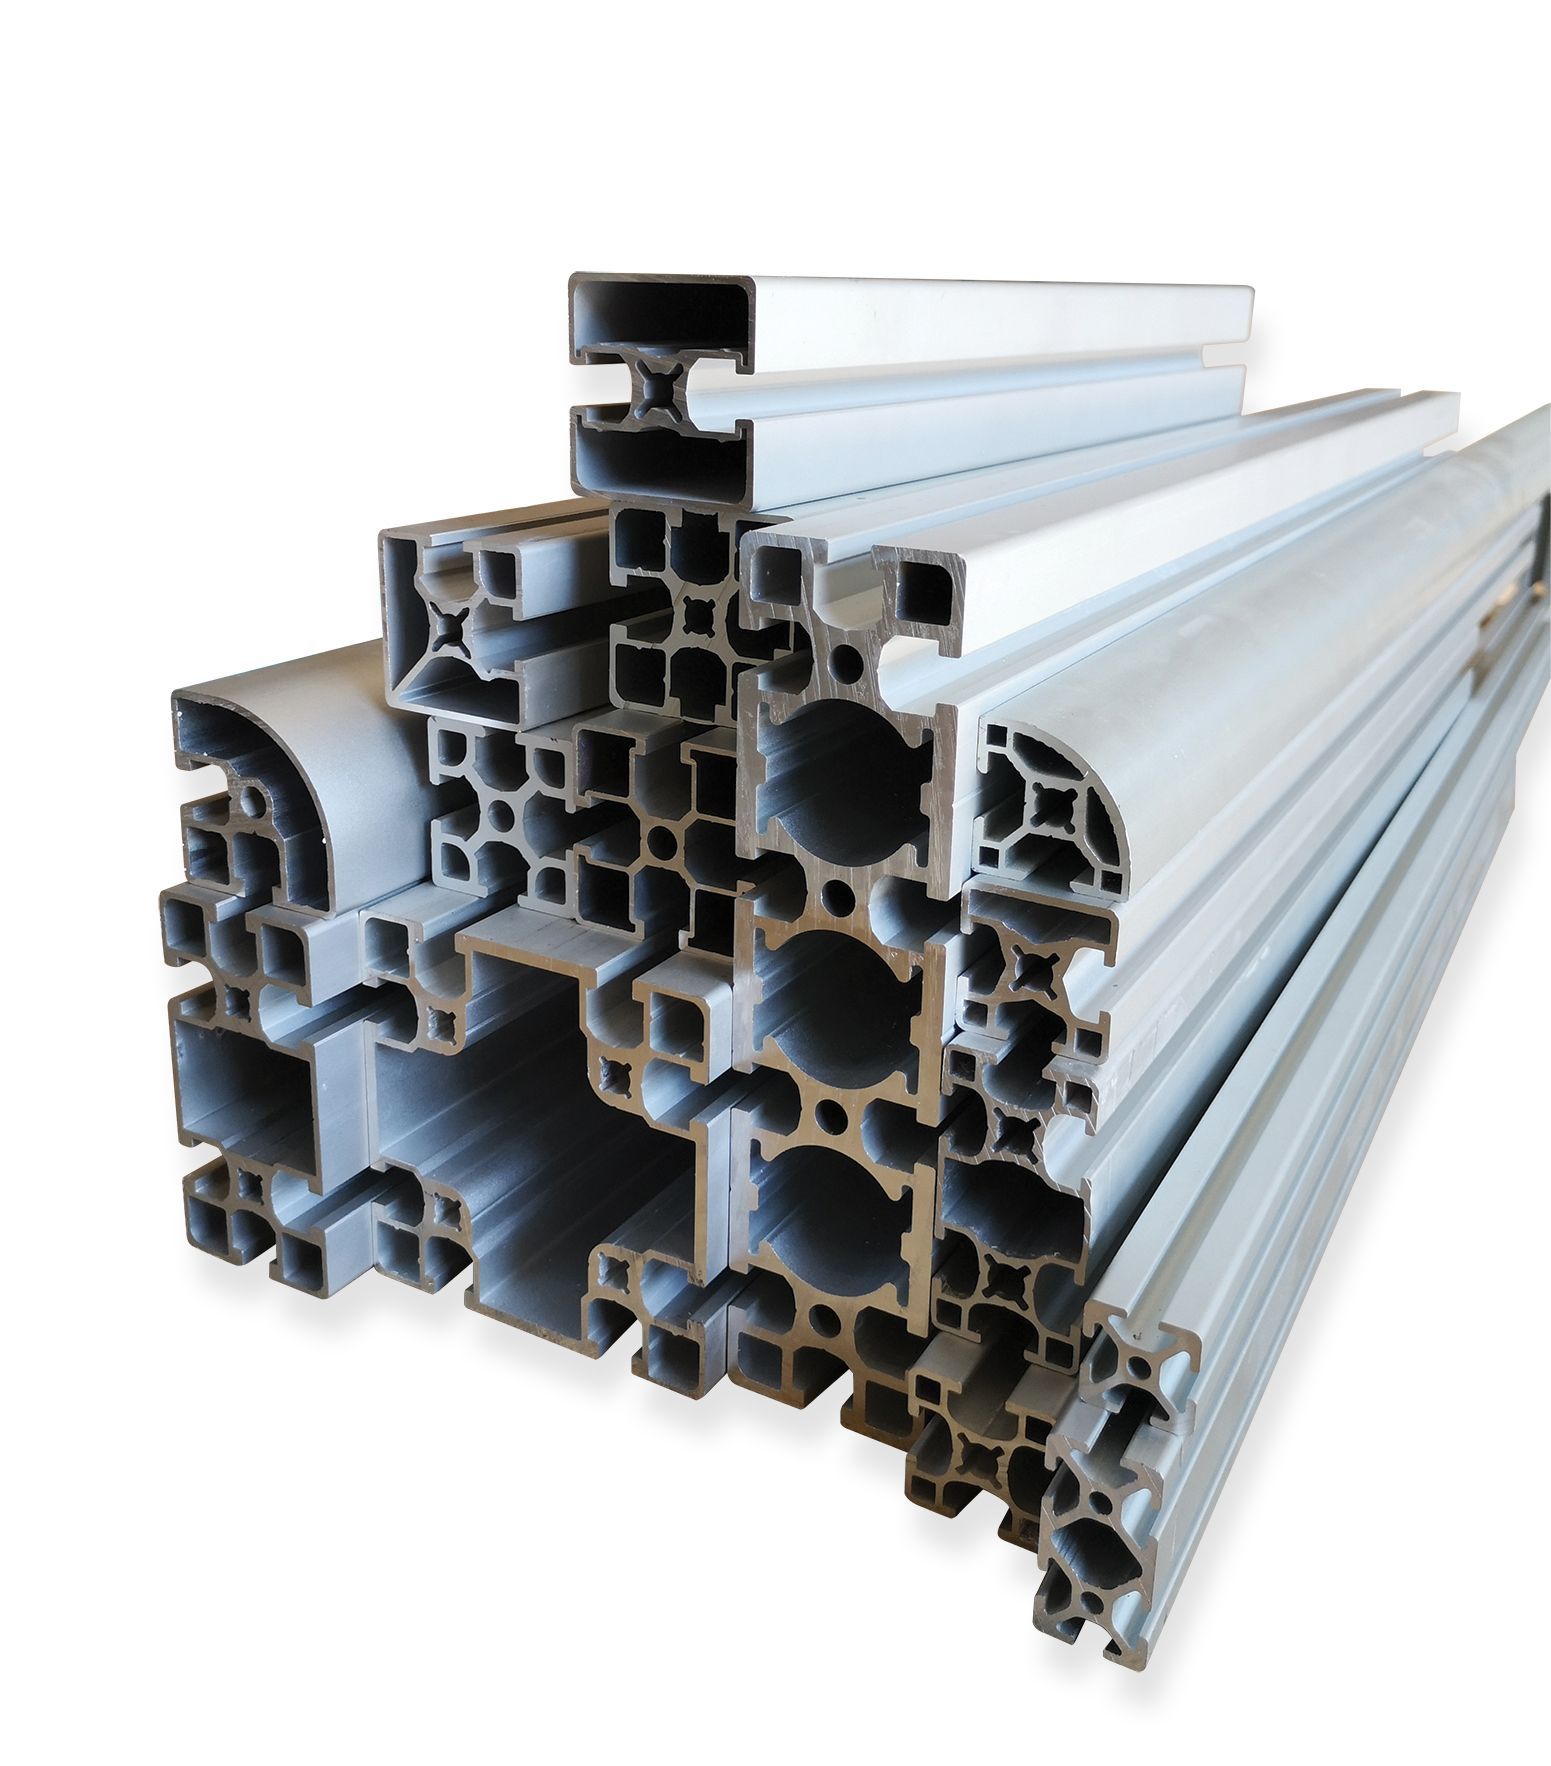 Tuyau de tube profilé en aluminium extrudé avec prix du fabricant